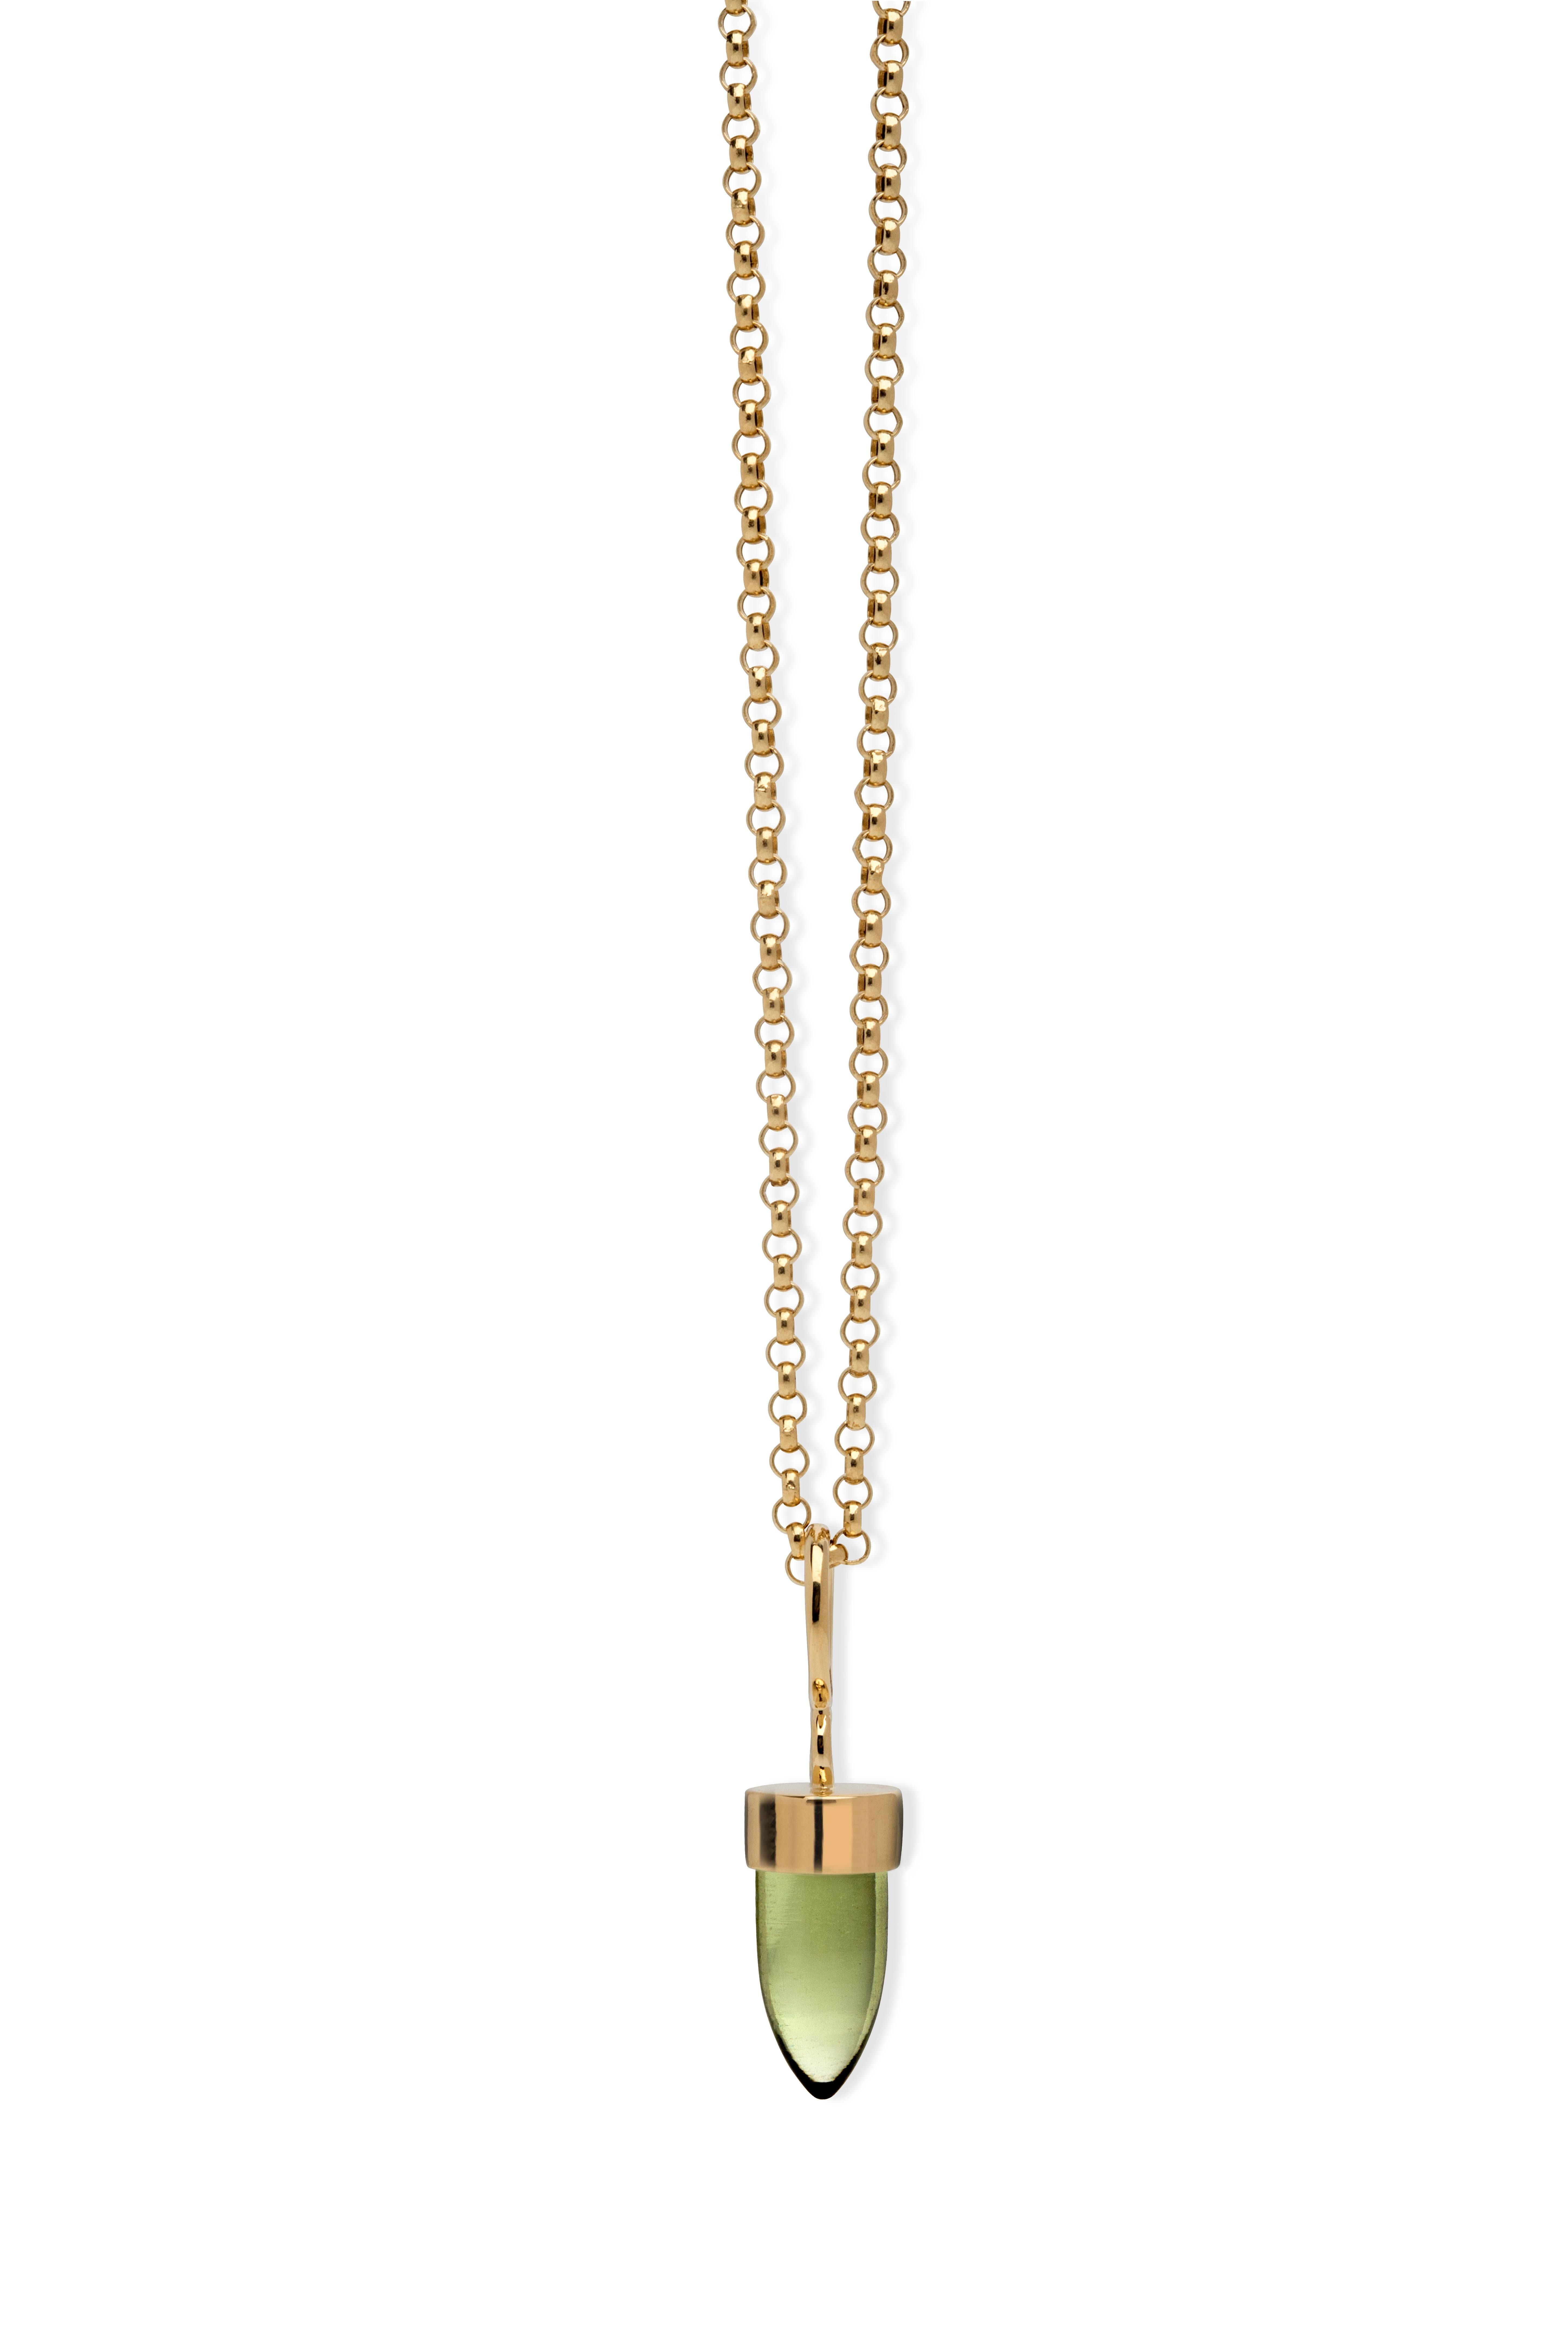 MAVIADA's Modern Minimalist Purple Amethyst 18 Karat Gold Pendant Necklace For Sale 6